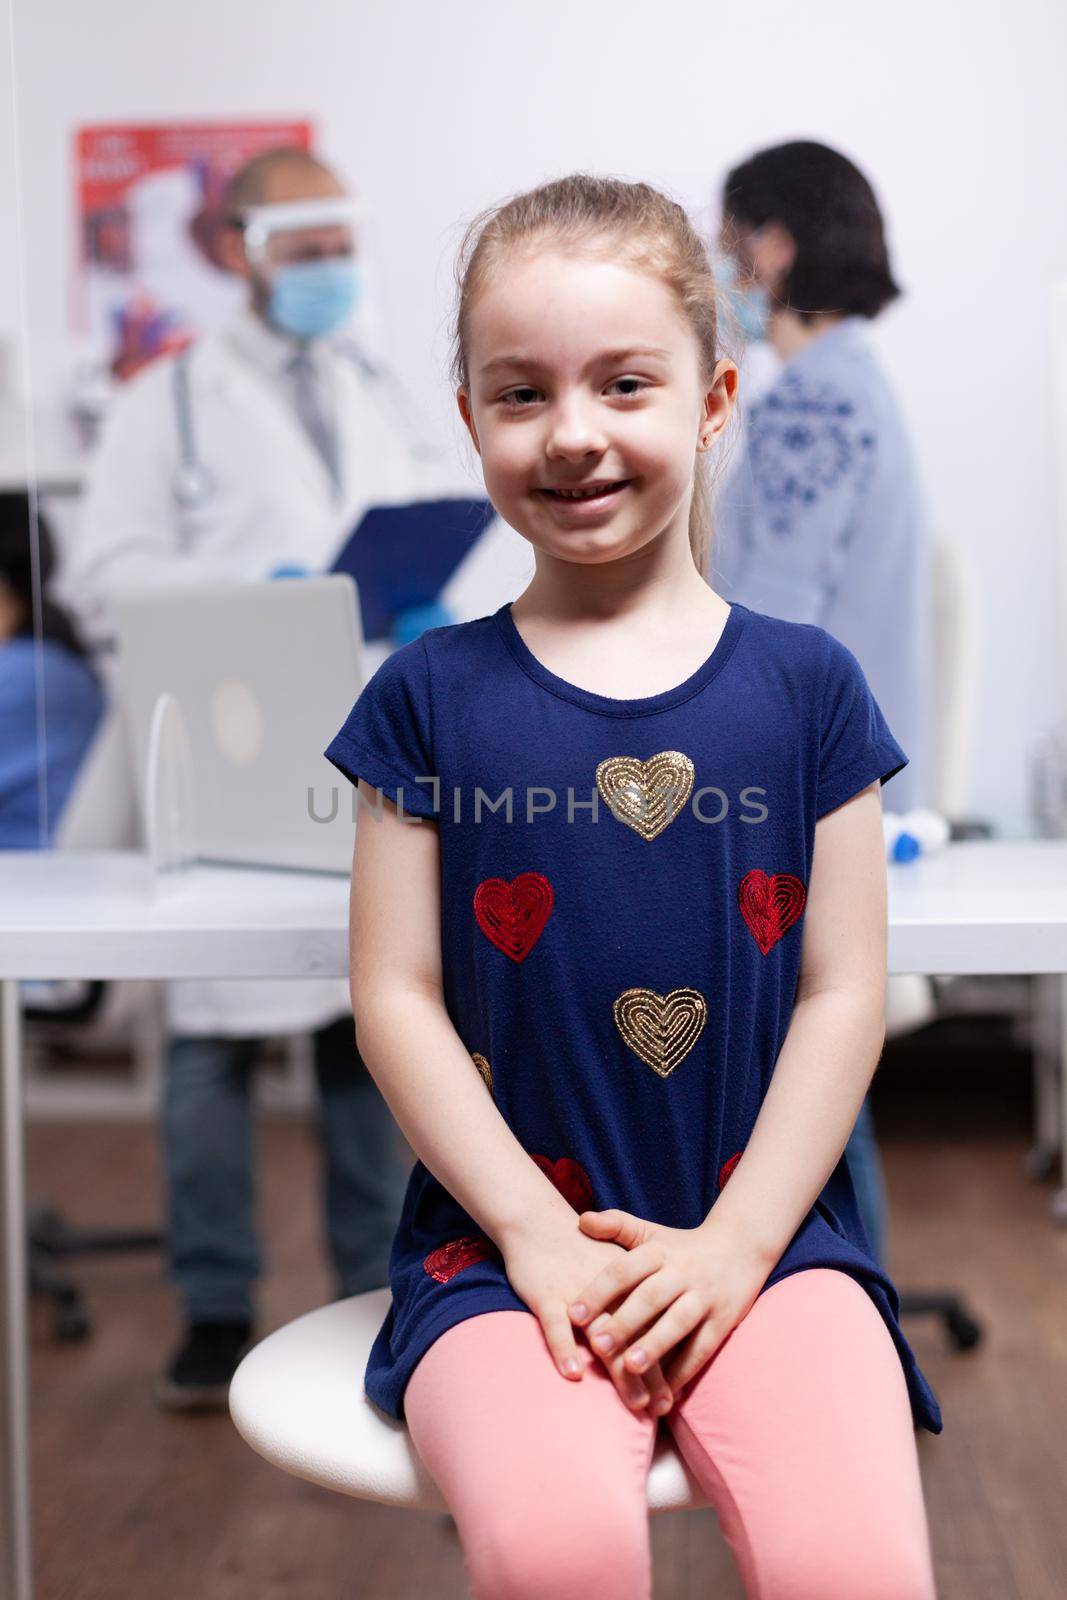 Girl at medical examination during pandemic by DCStudio